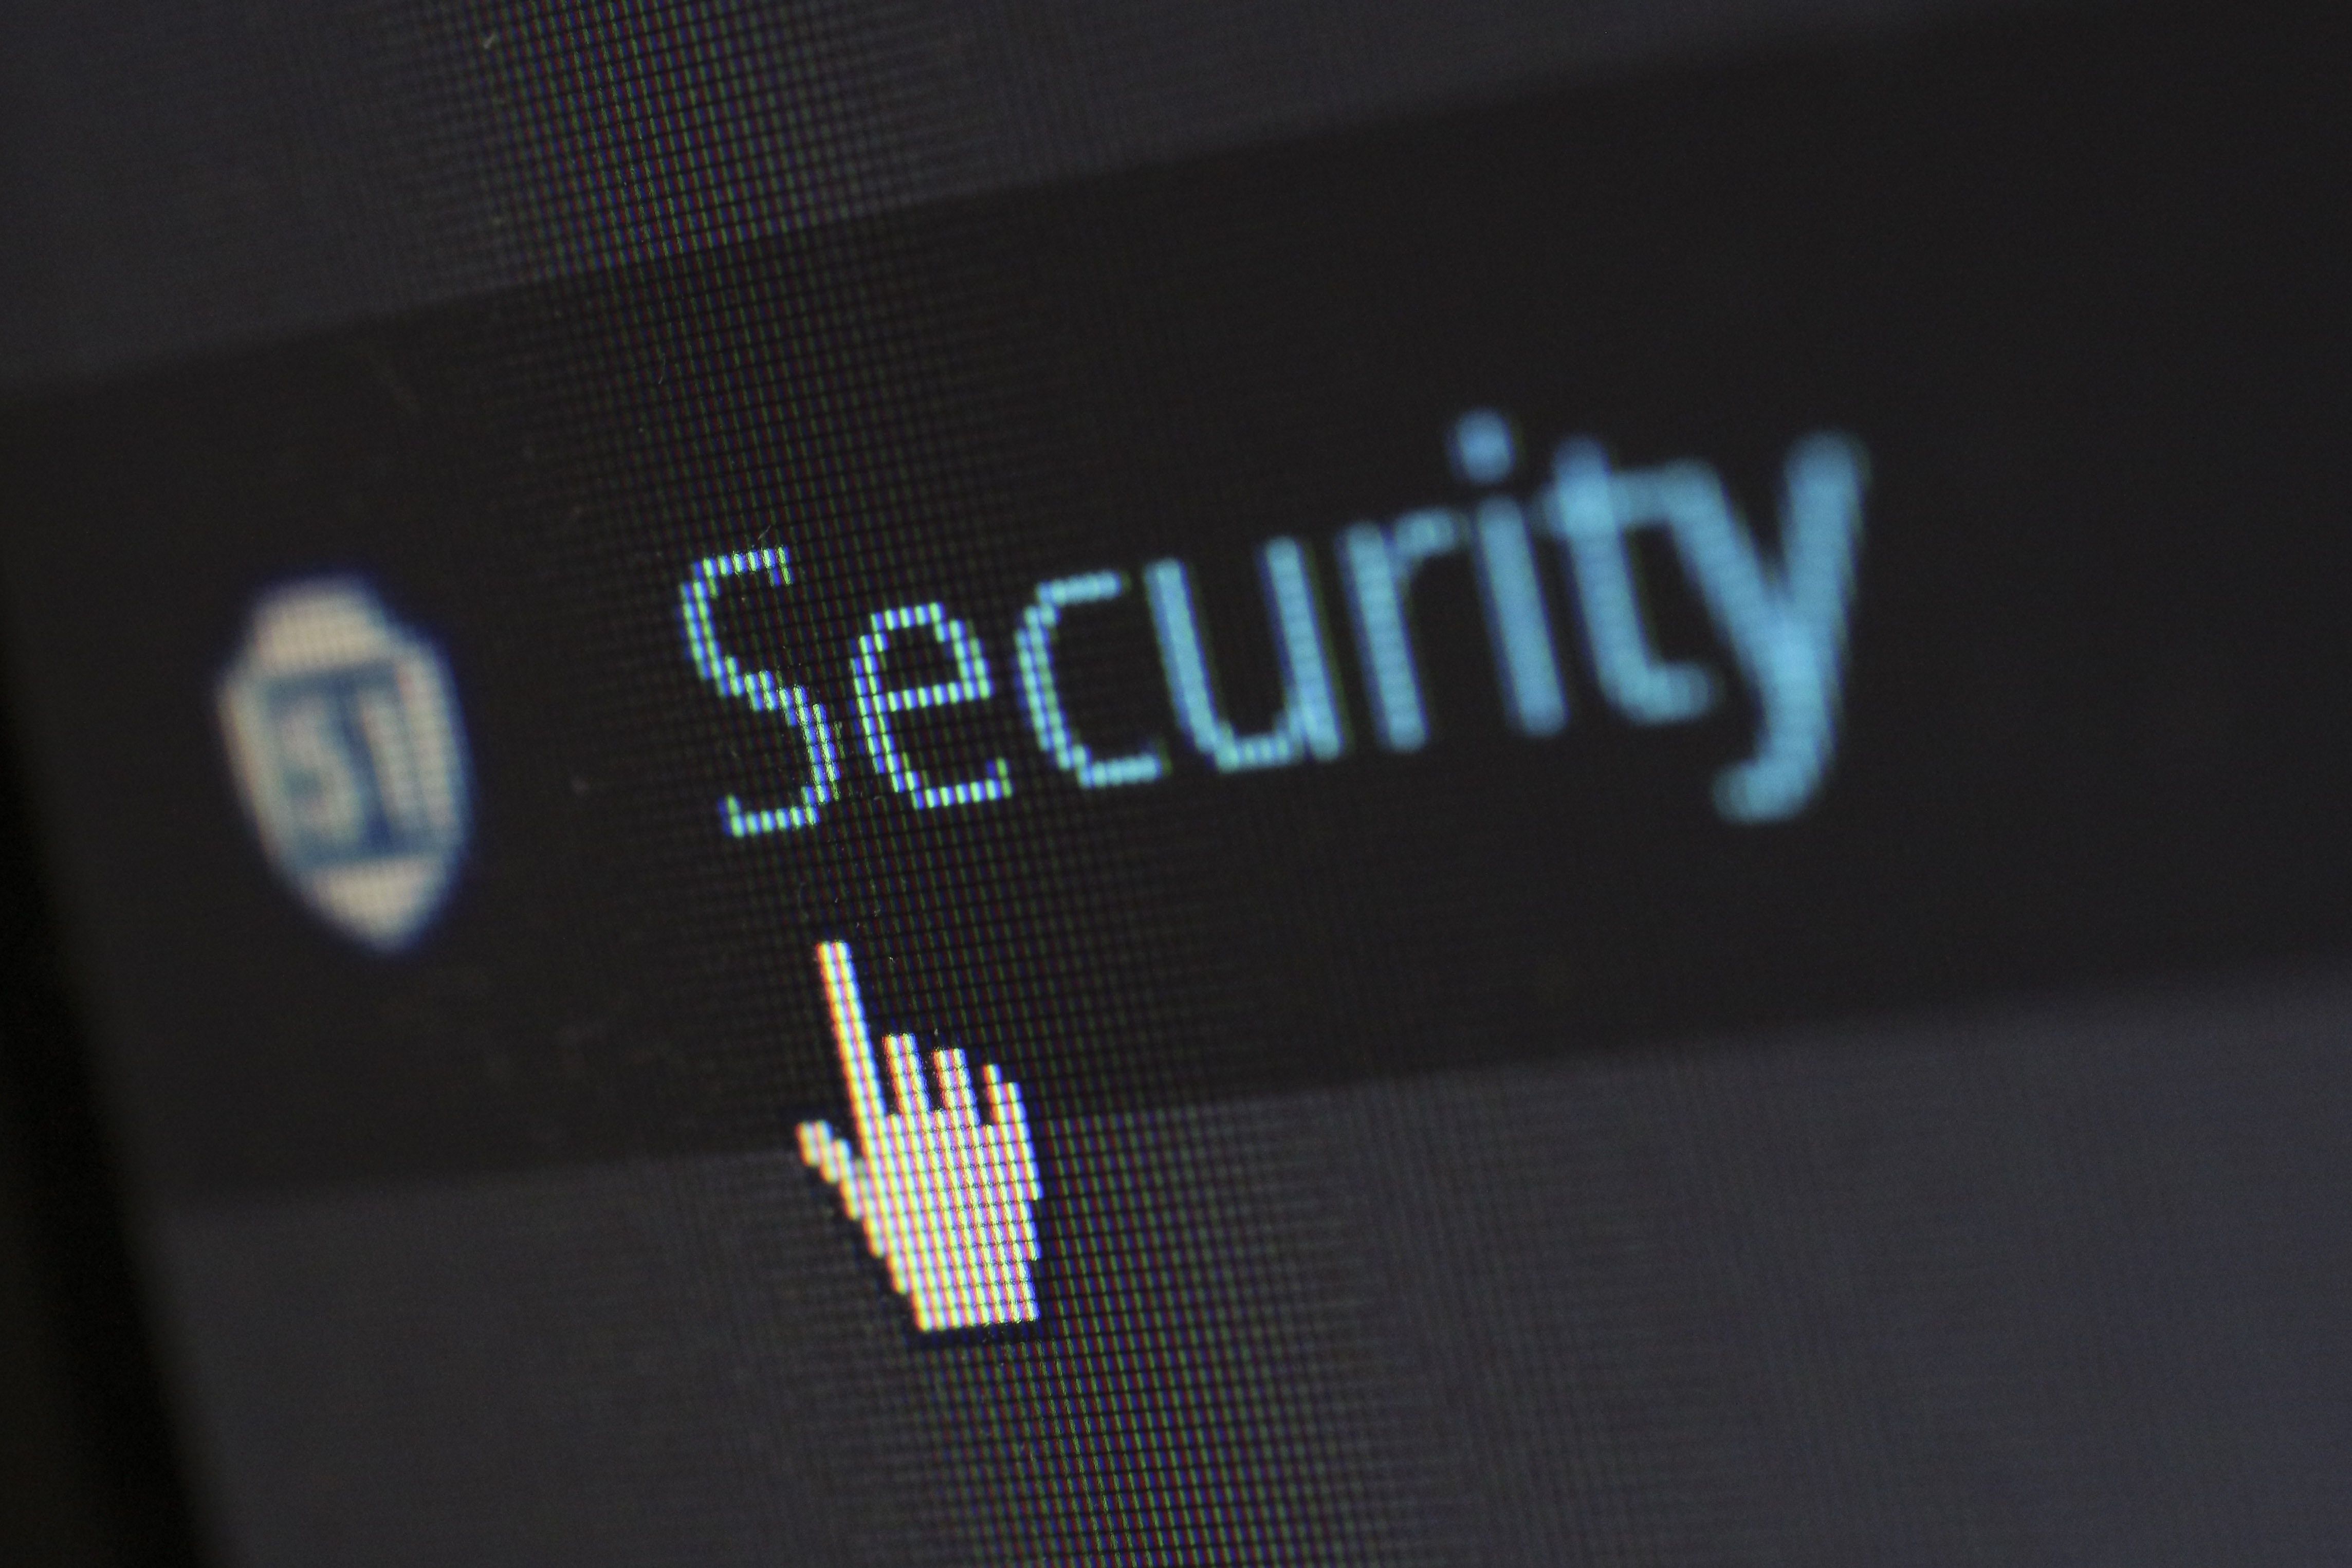 OSINT helps companies prevent future security breaches